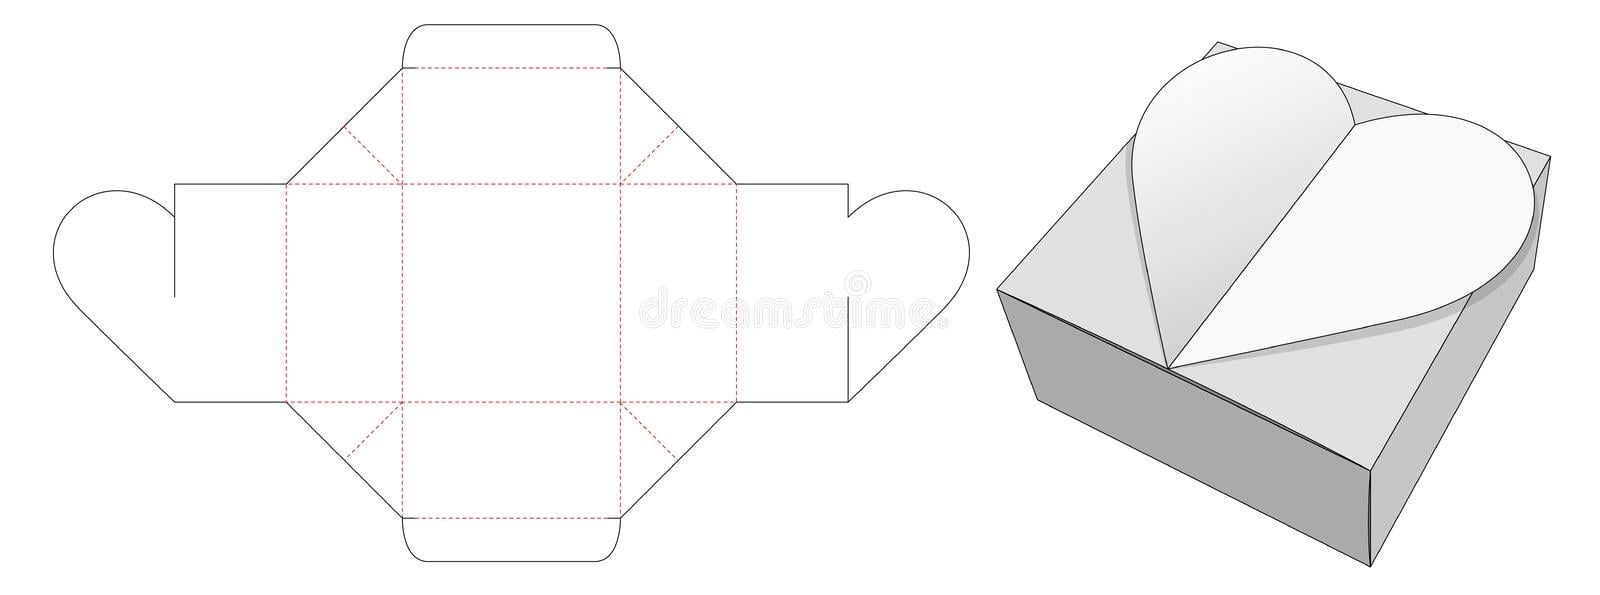 Heart Packaging Box Die Cut Template Stock Vector Illustration Of Cardboard Package 174123083